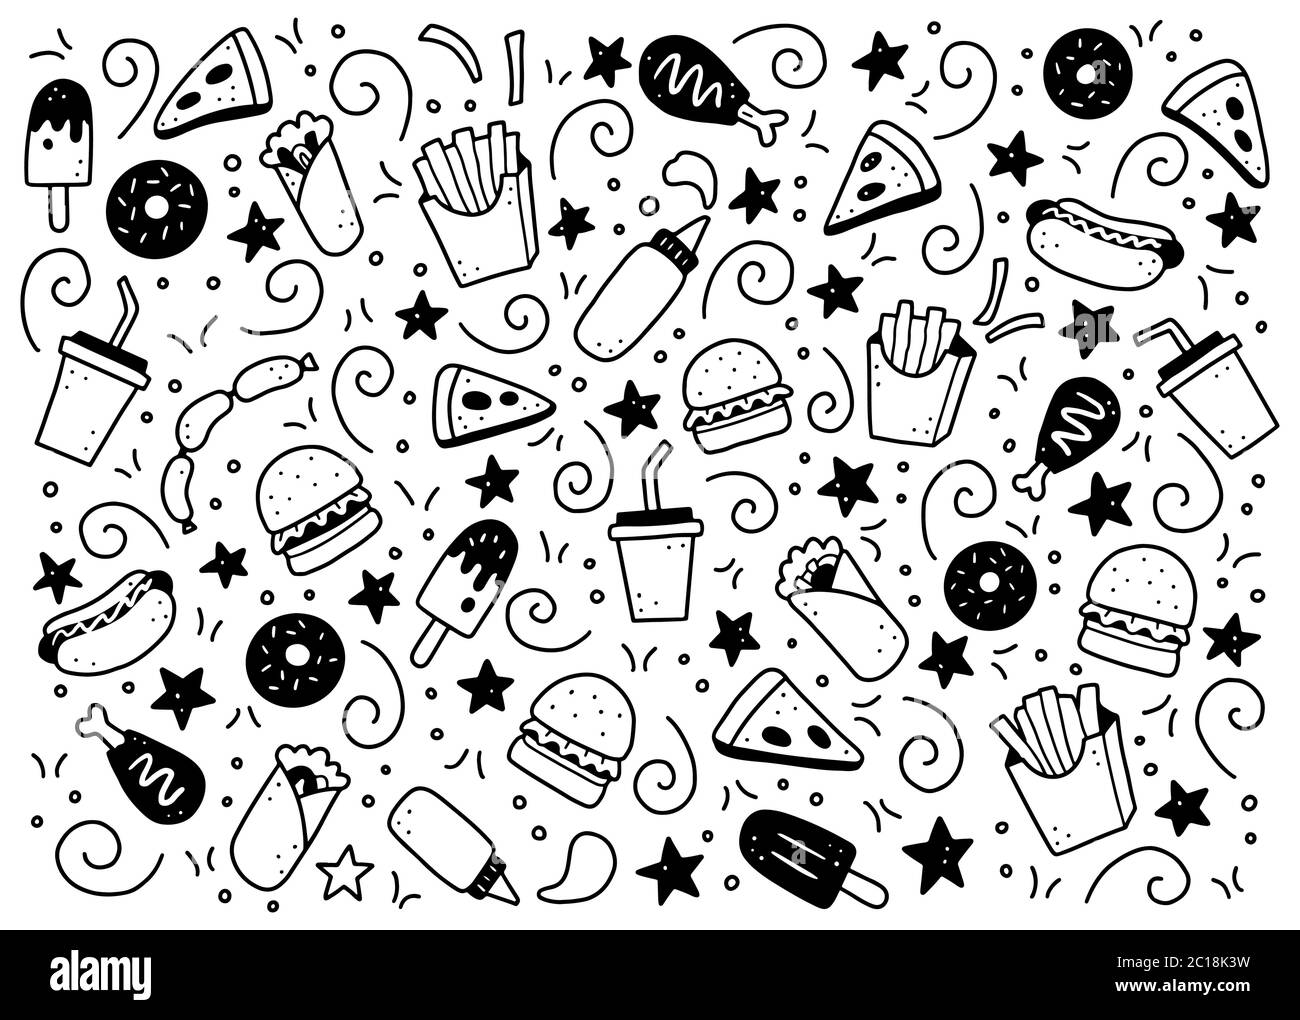 Hand drawn set of fast food elements, burger, pizza, sandwich, hamburger, snack. Comic doodle sketch style. Fast food element drawn by digital brush-pen. Vector illustration for icon, menu, frame design. Stock Vector